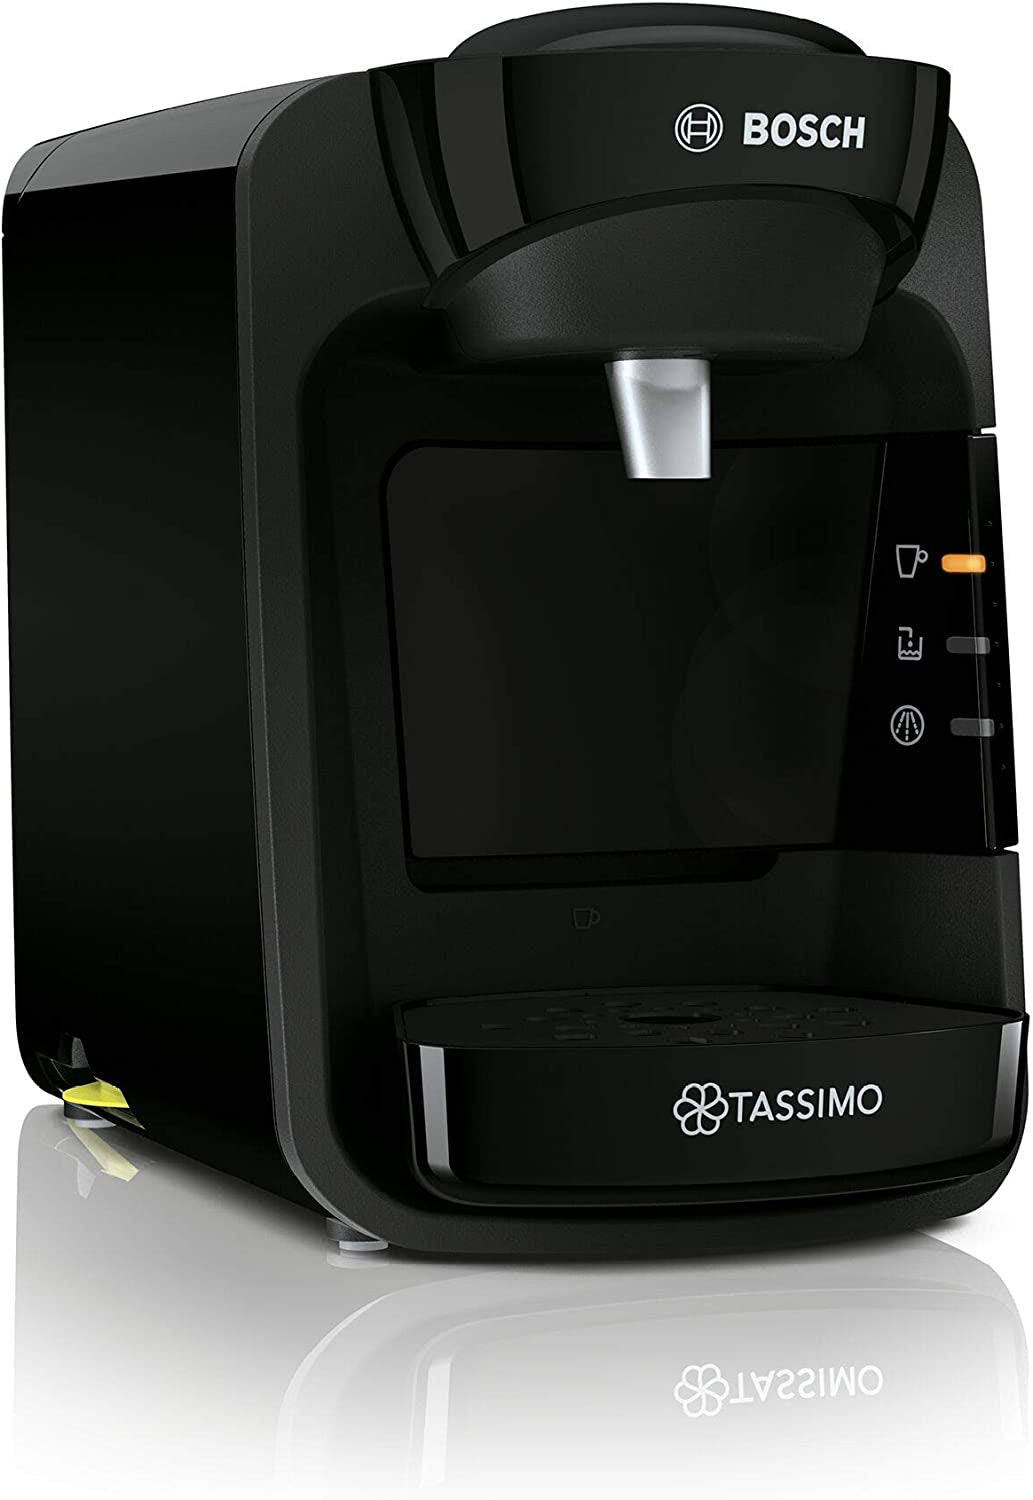 by Bosch Suny 'Special Edition' TAS3102GB Coffee Machine,1300 Watt, 0.8 Litre - Black